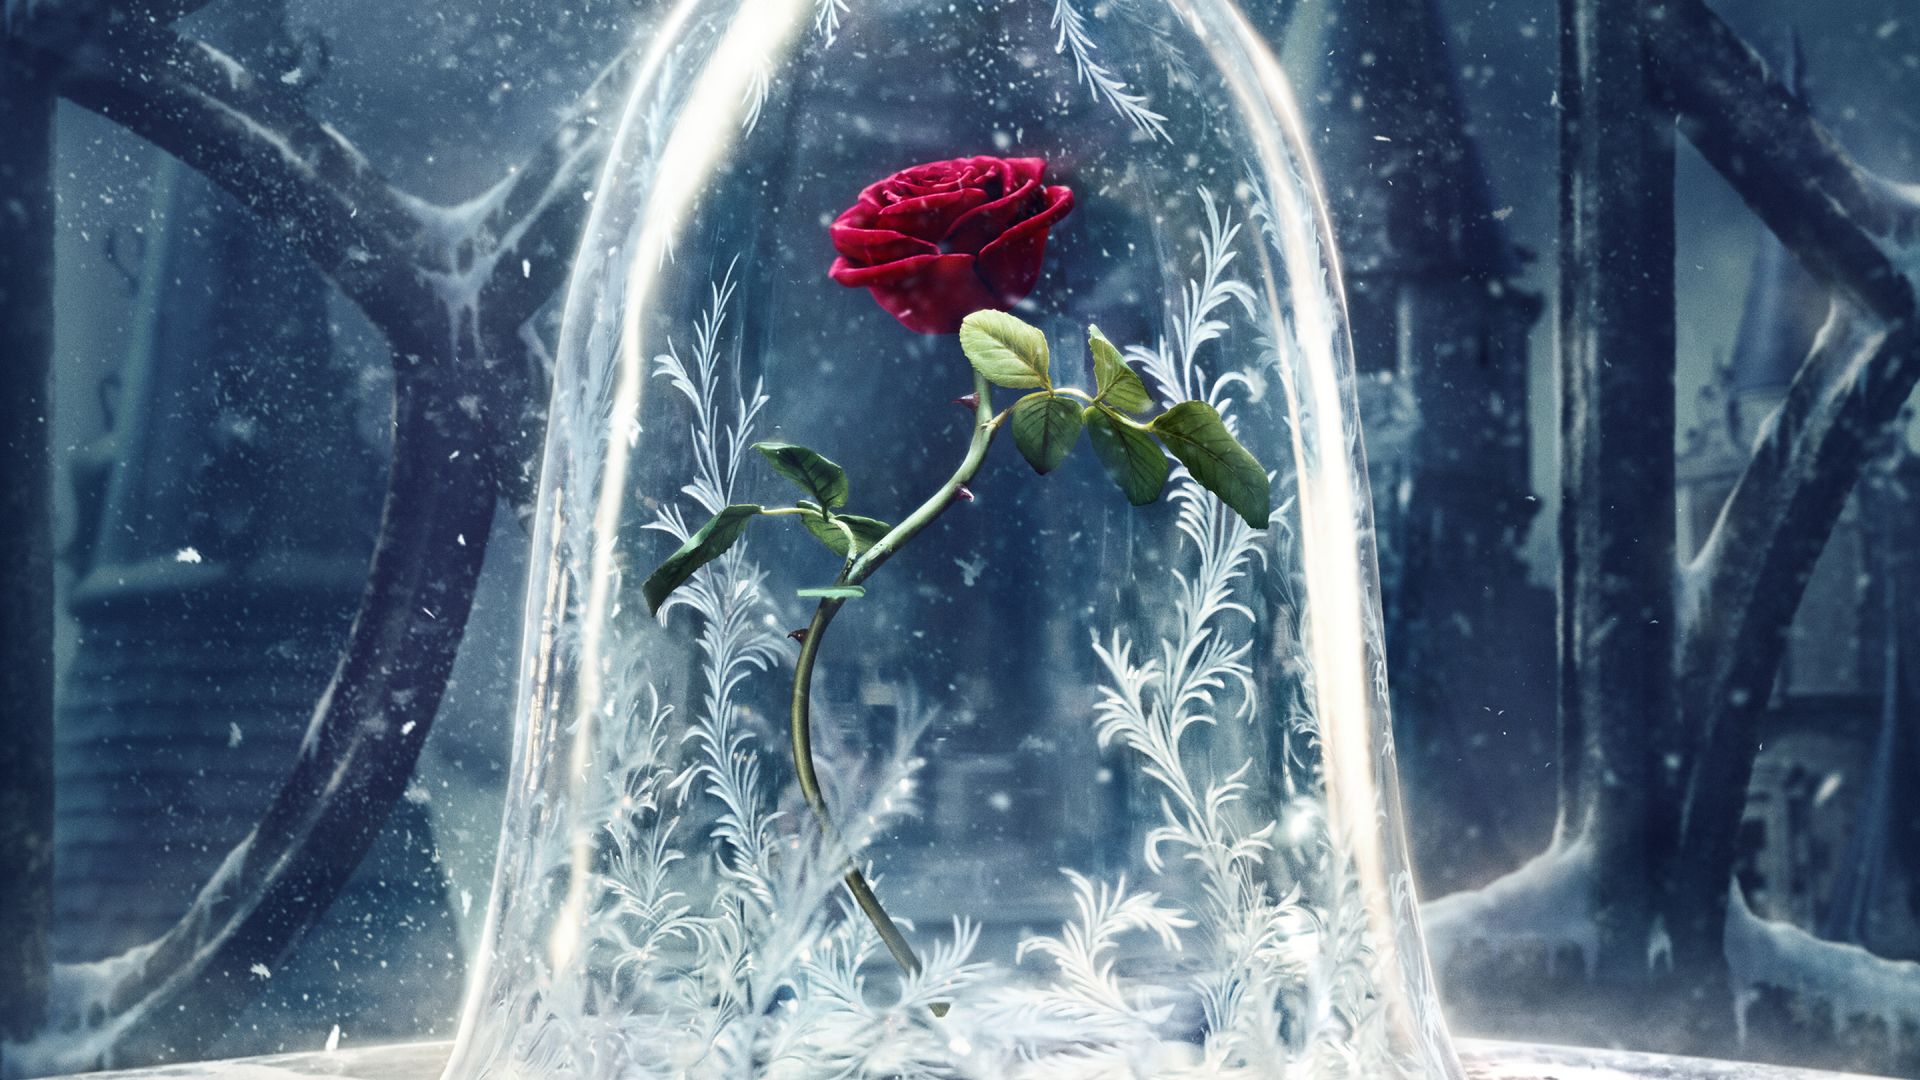 Красавица и Чудовище, стекло, роза, лучшие фильмы, Beauty and the Beast, glass, rose, best movies (horizontal)